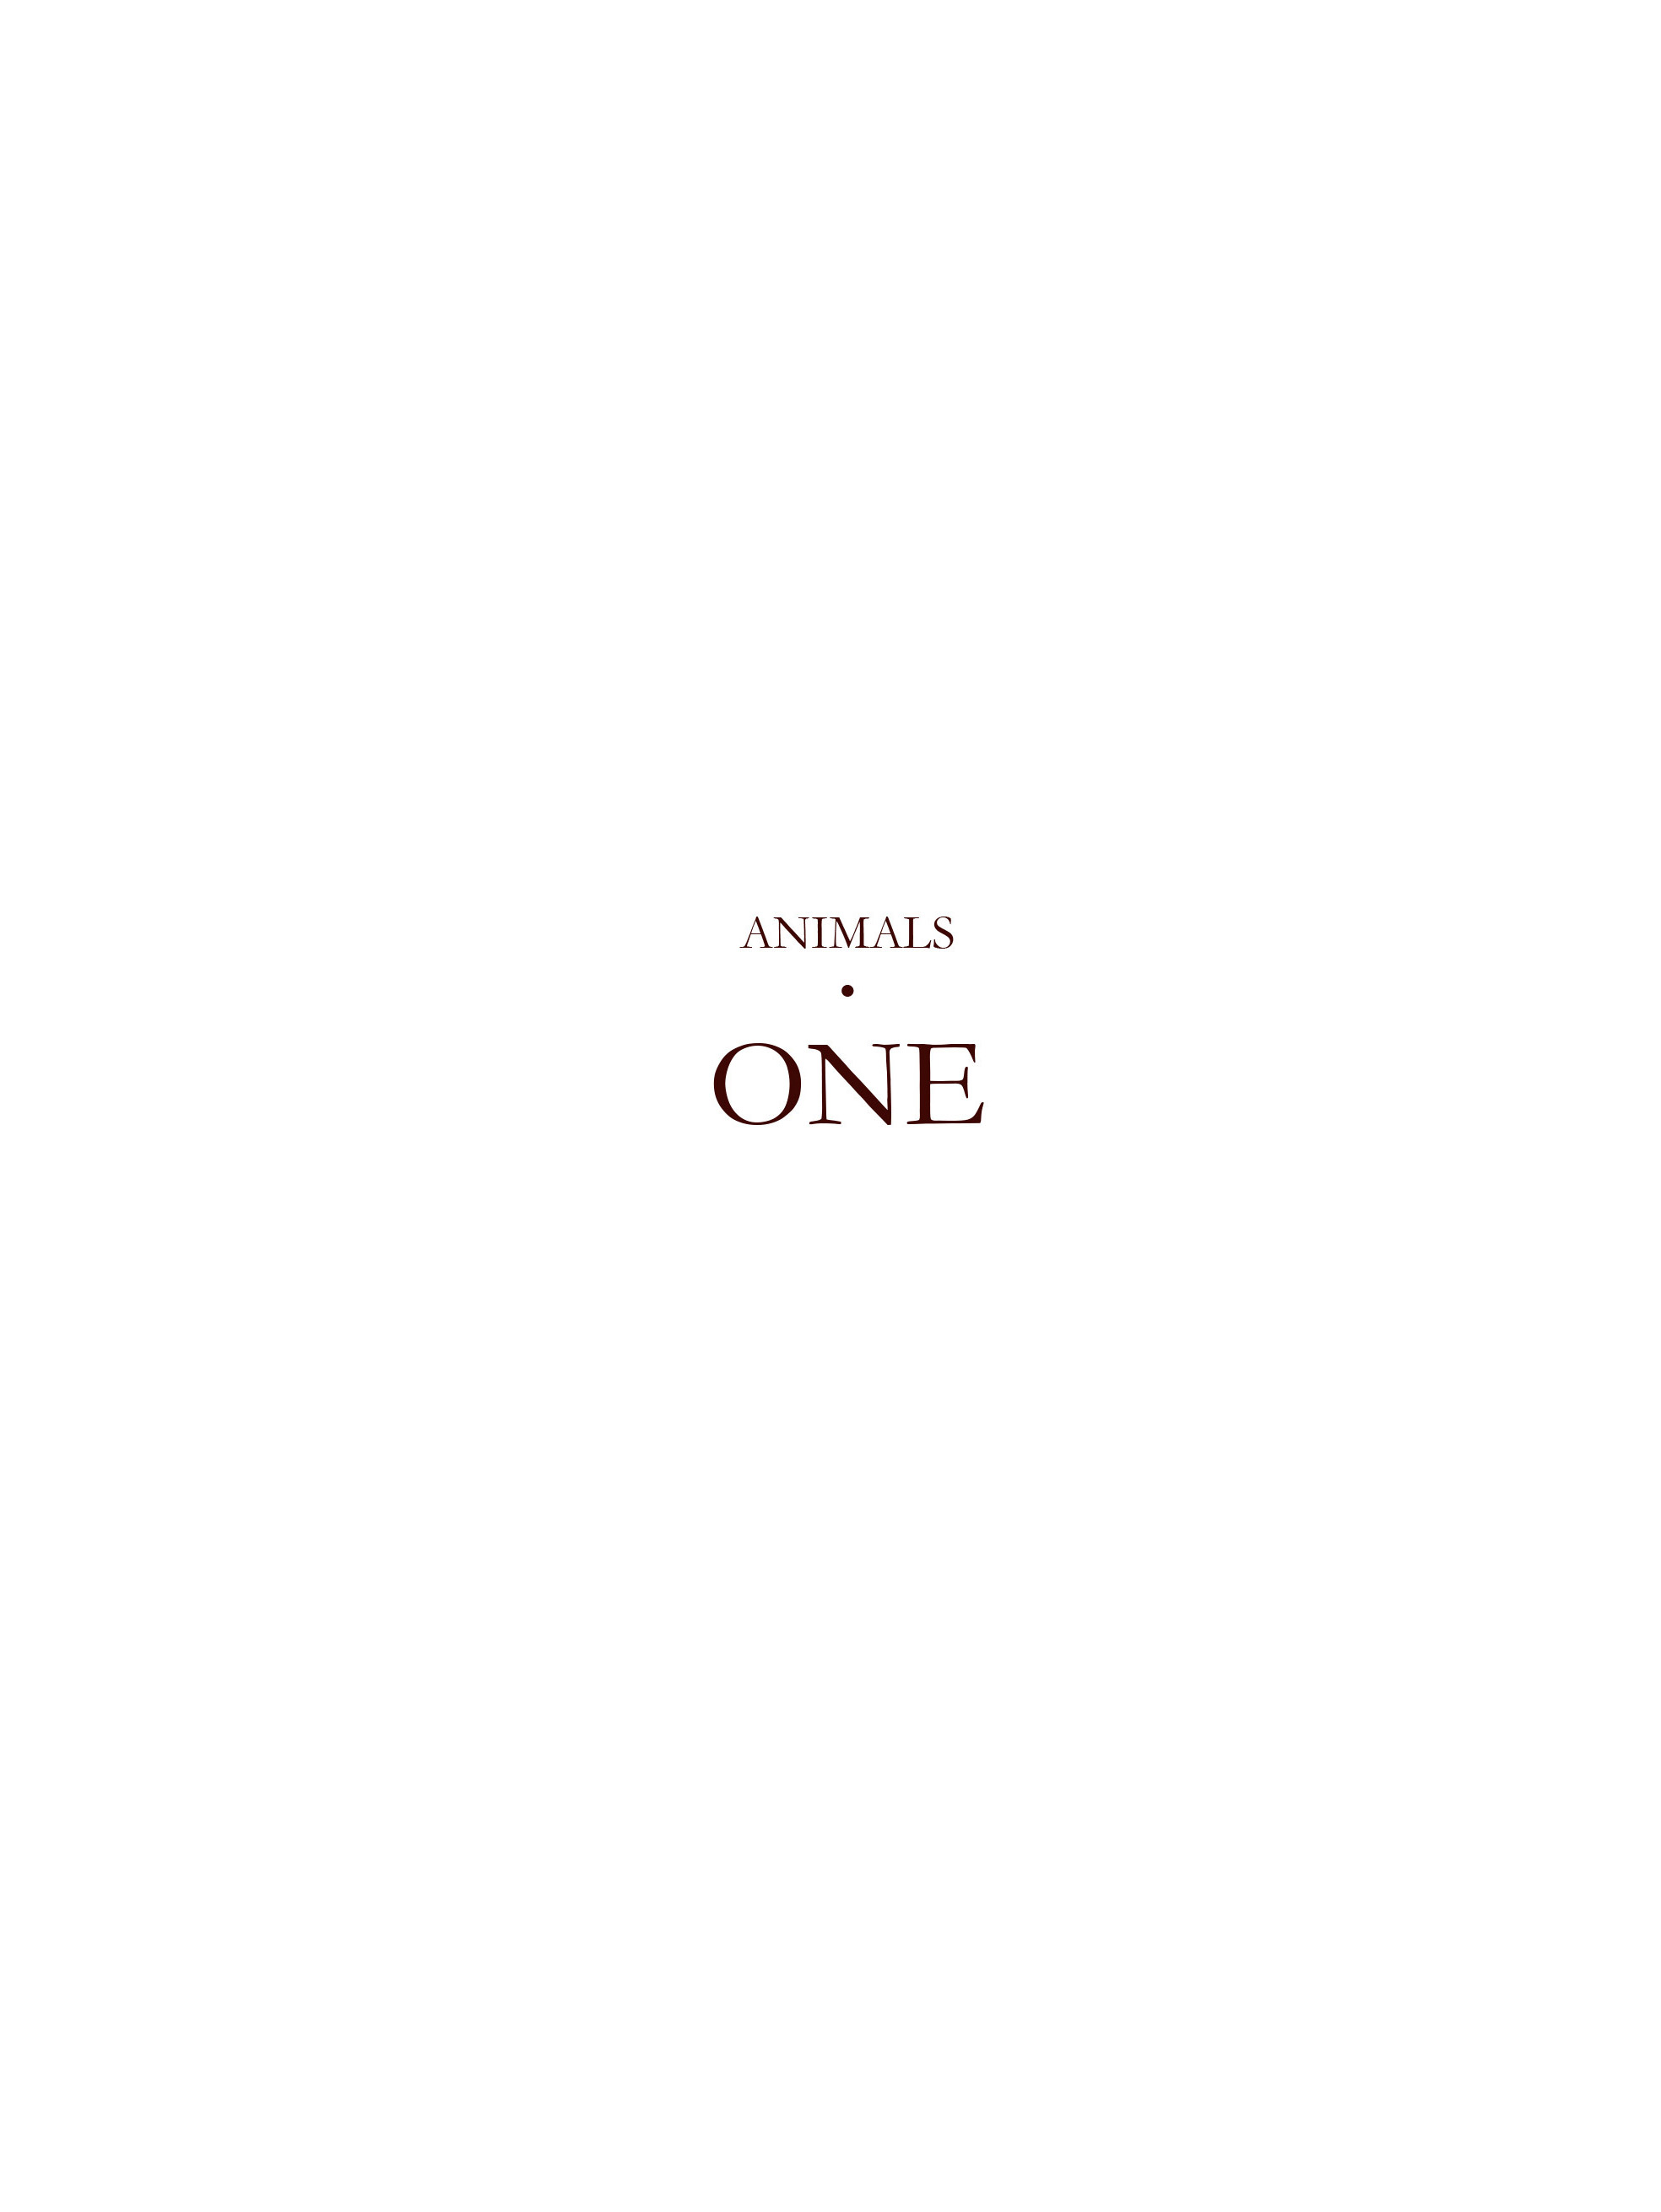 Read online Animals comic -  Issue #1 - 4